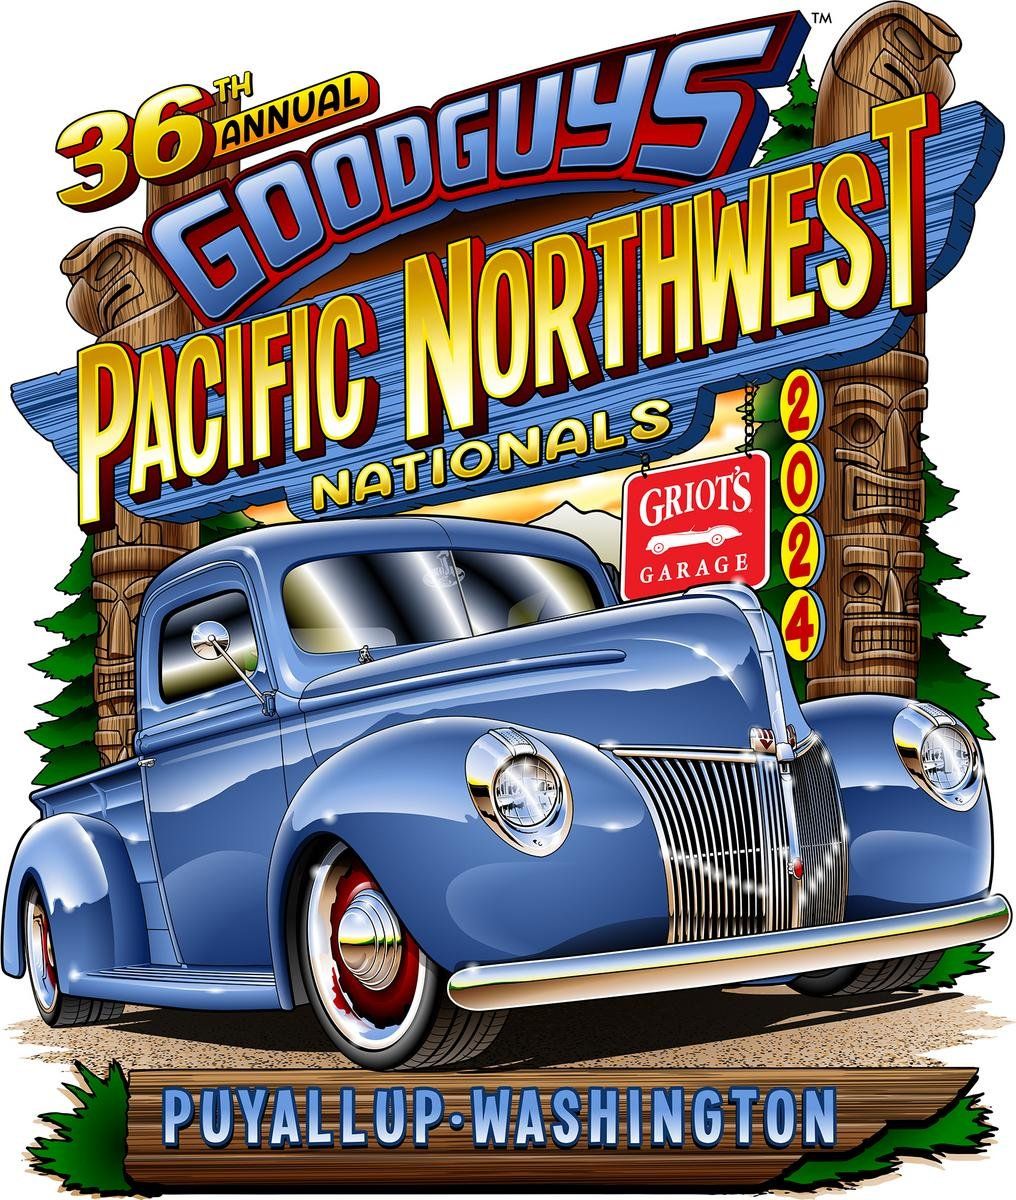 Goodguys Car Show - 36th Griots Garage Pacific Northwest Nationals